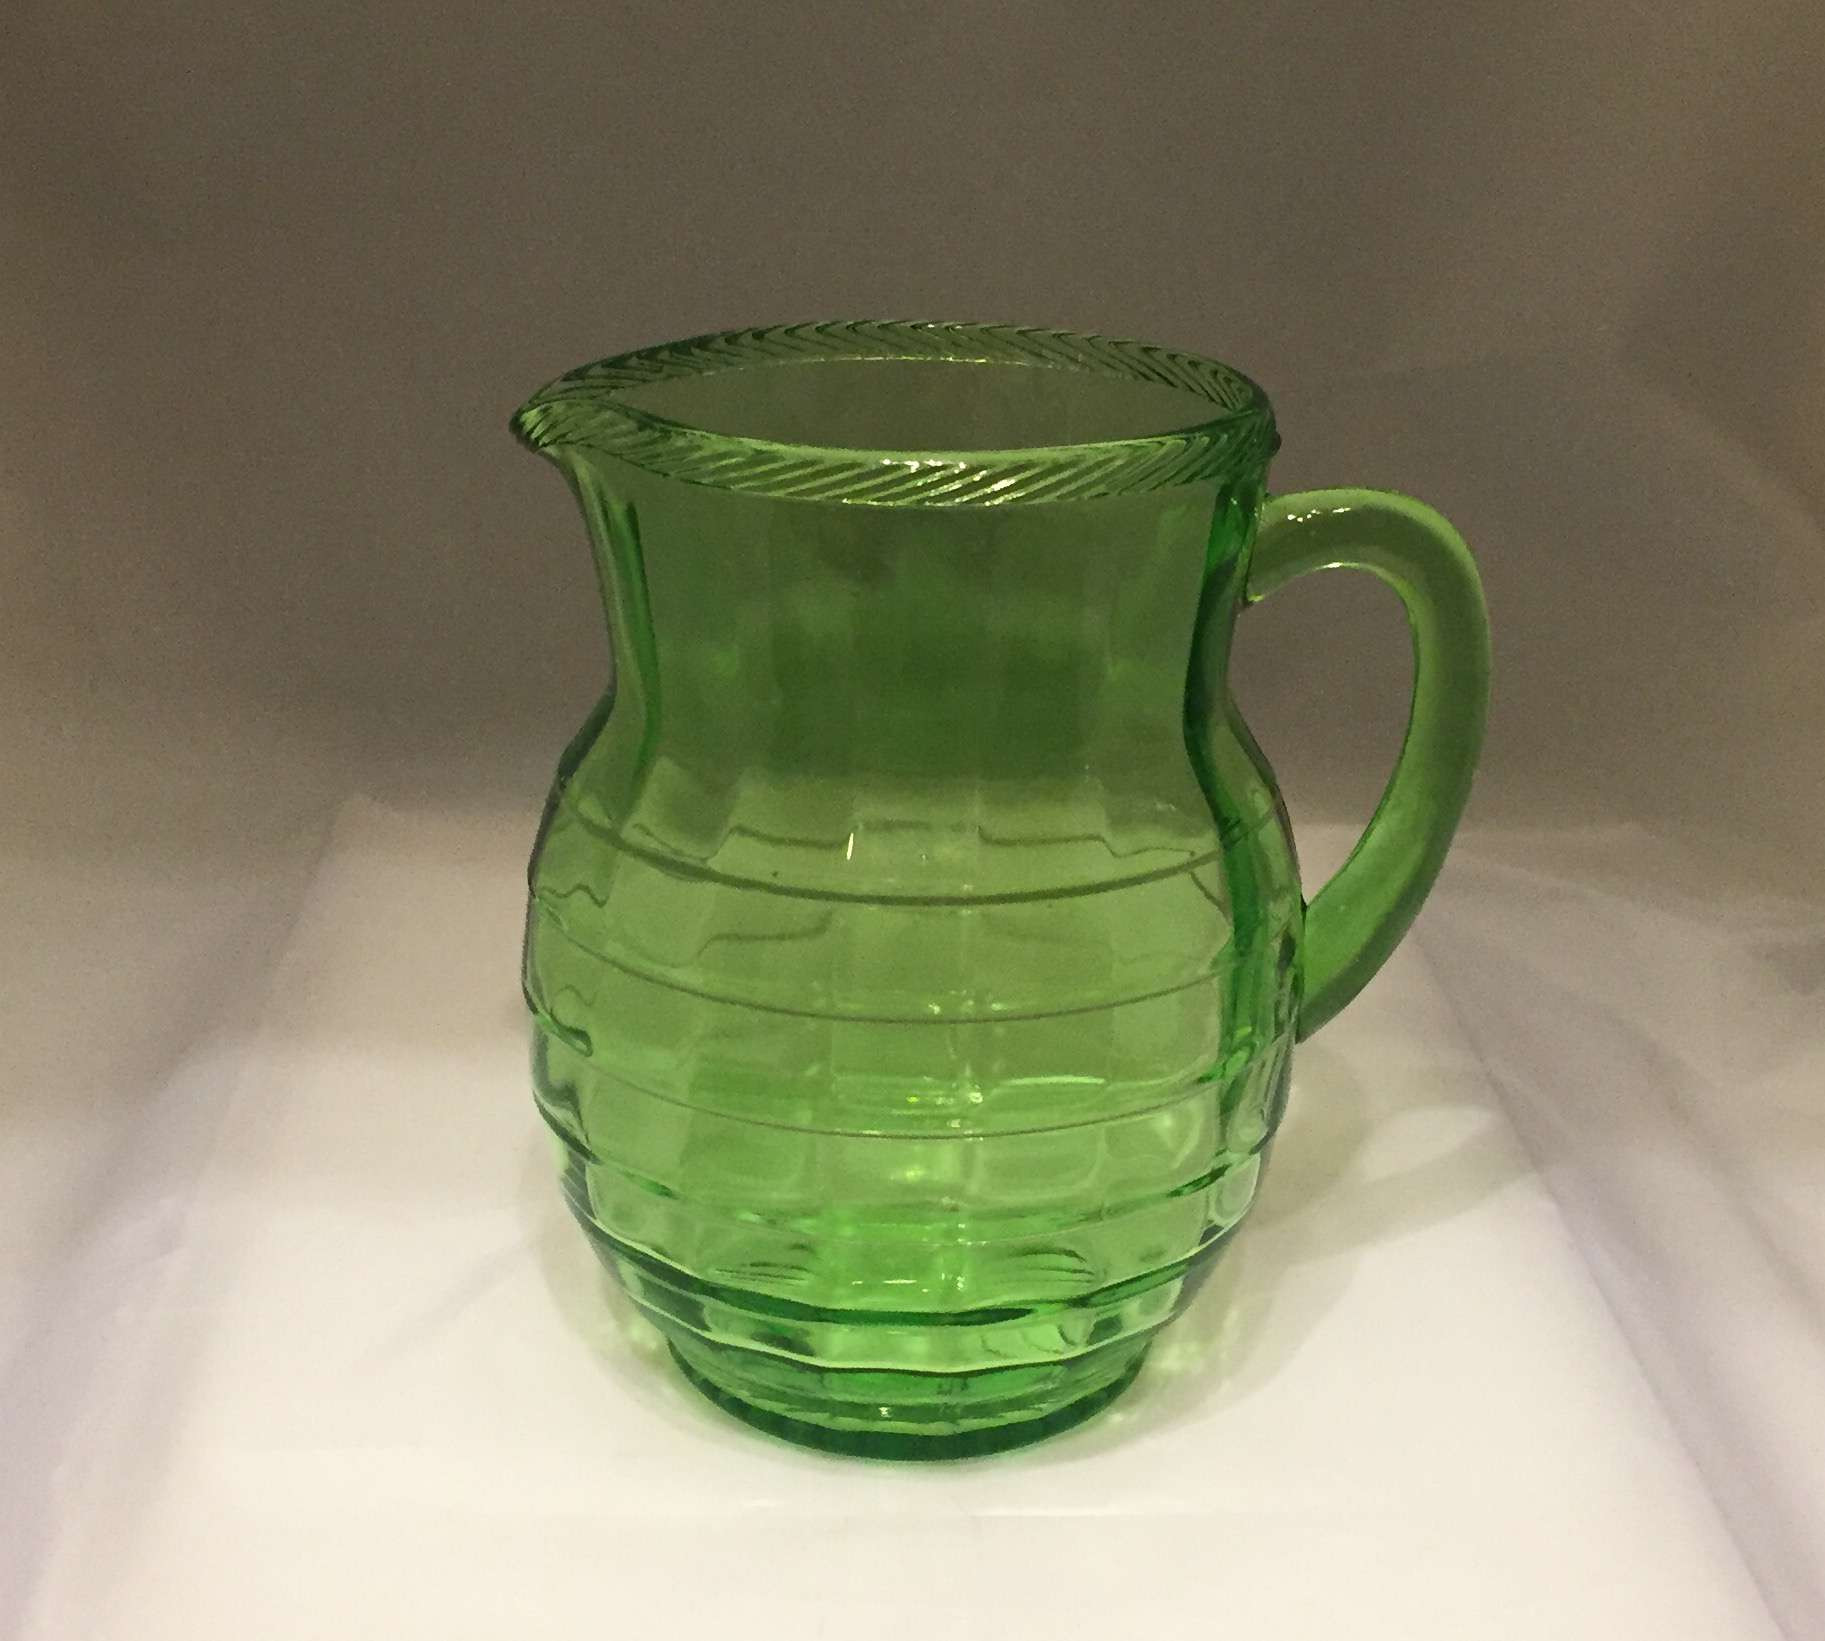 28 Unique Small Green Glass Vase 2024 free download small green glass vase of depression glass price guide and pattern identification with regard to blockpitcher 5786c8e35f9b5831b54ecdb1